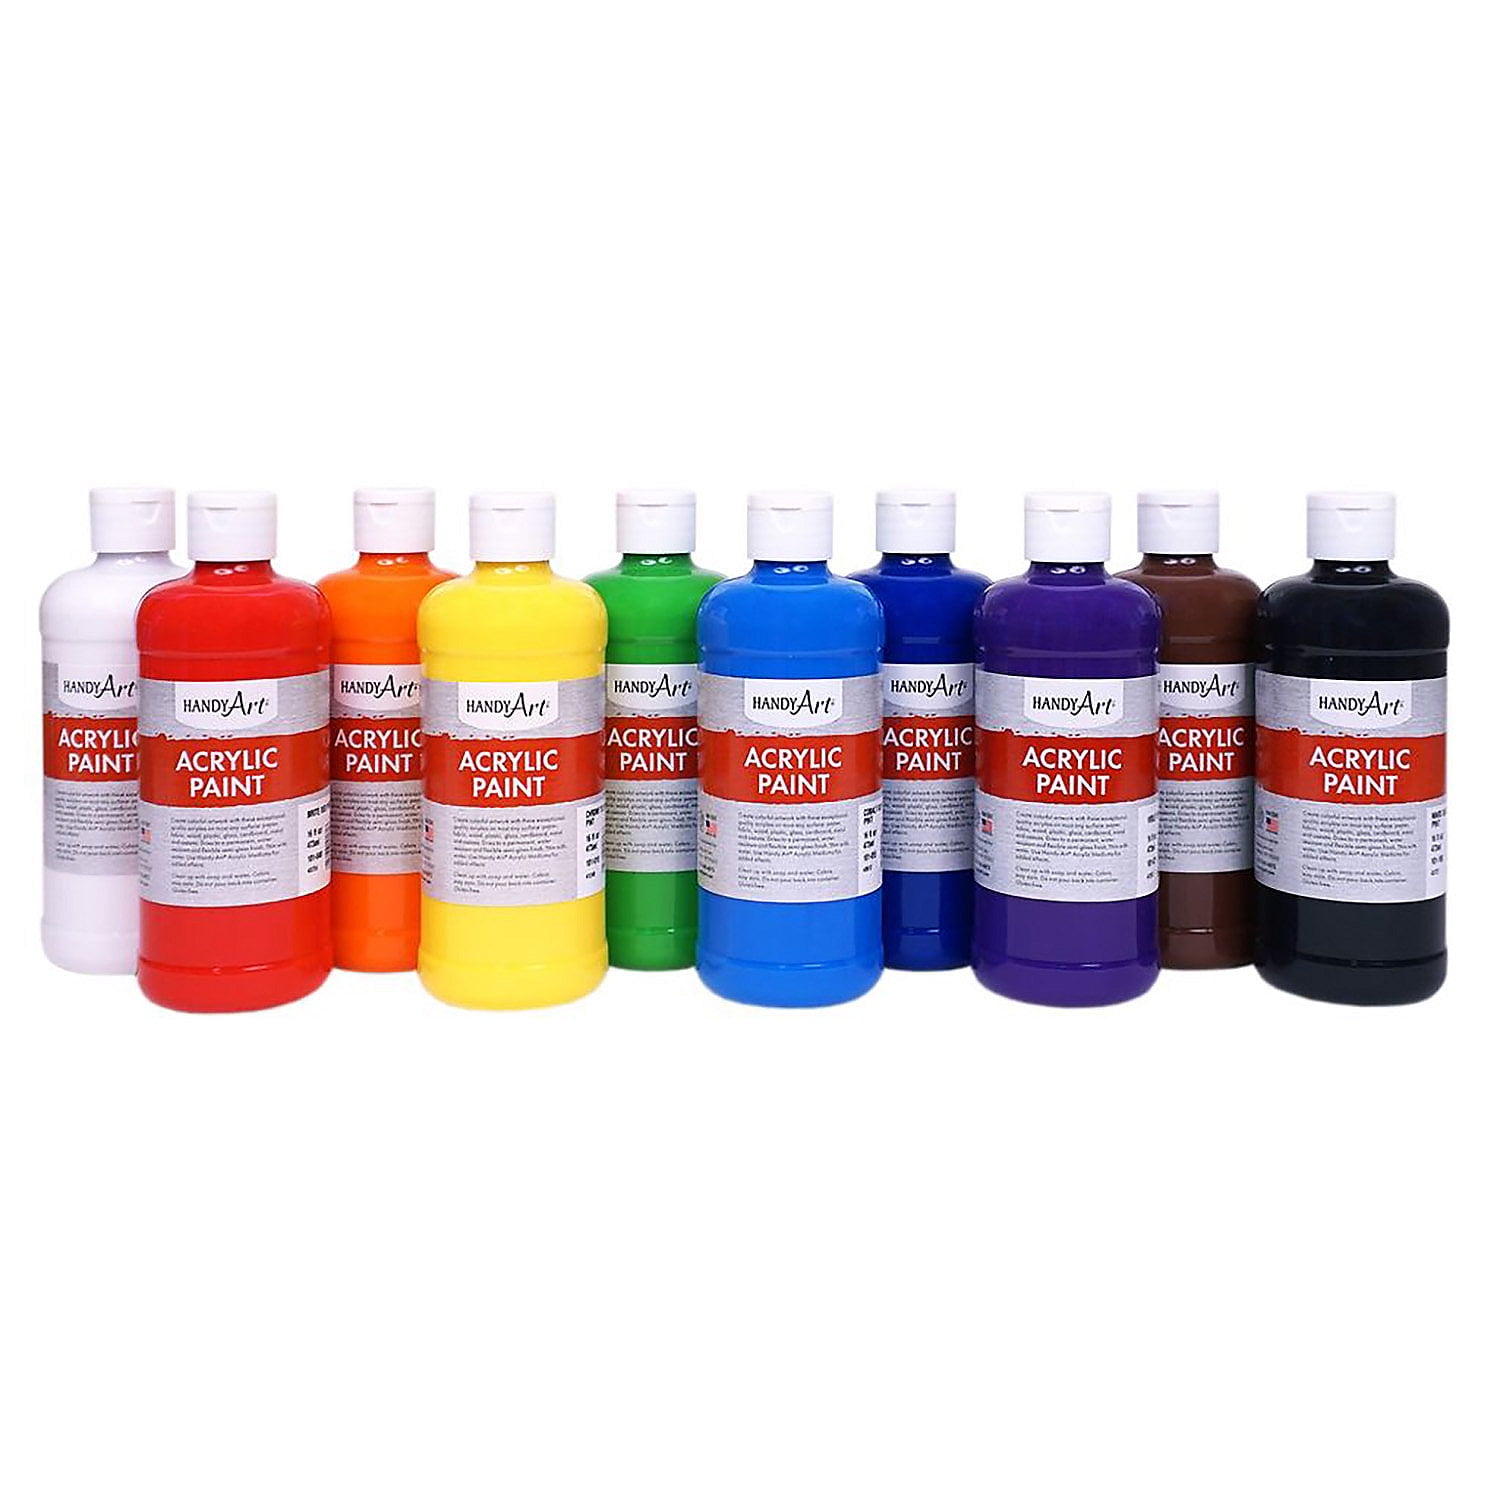 2Oz Primary Colors Acrylic Paint Bottles - Basic Supplies - 8 Pieces